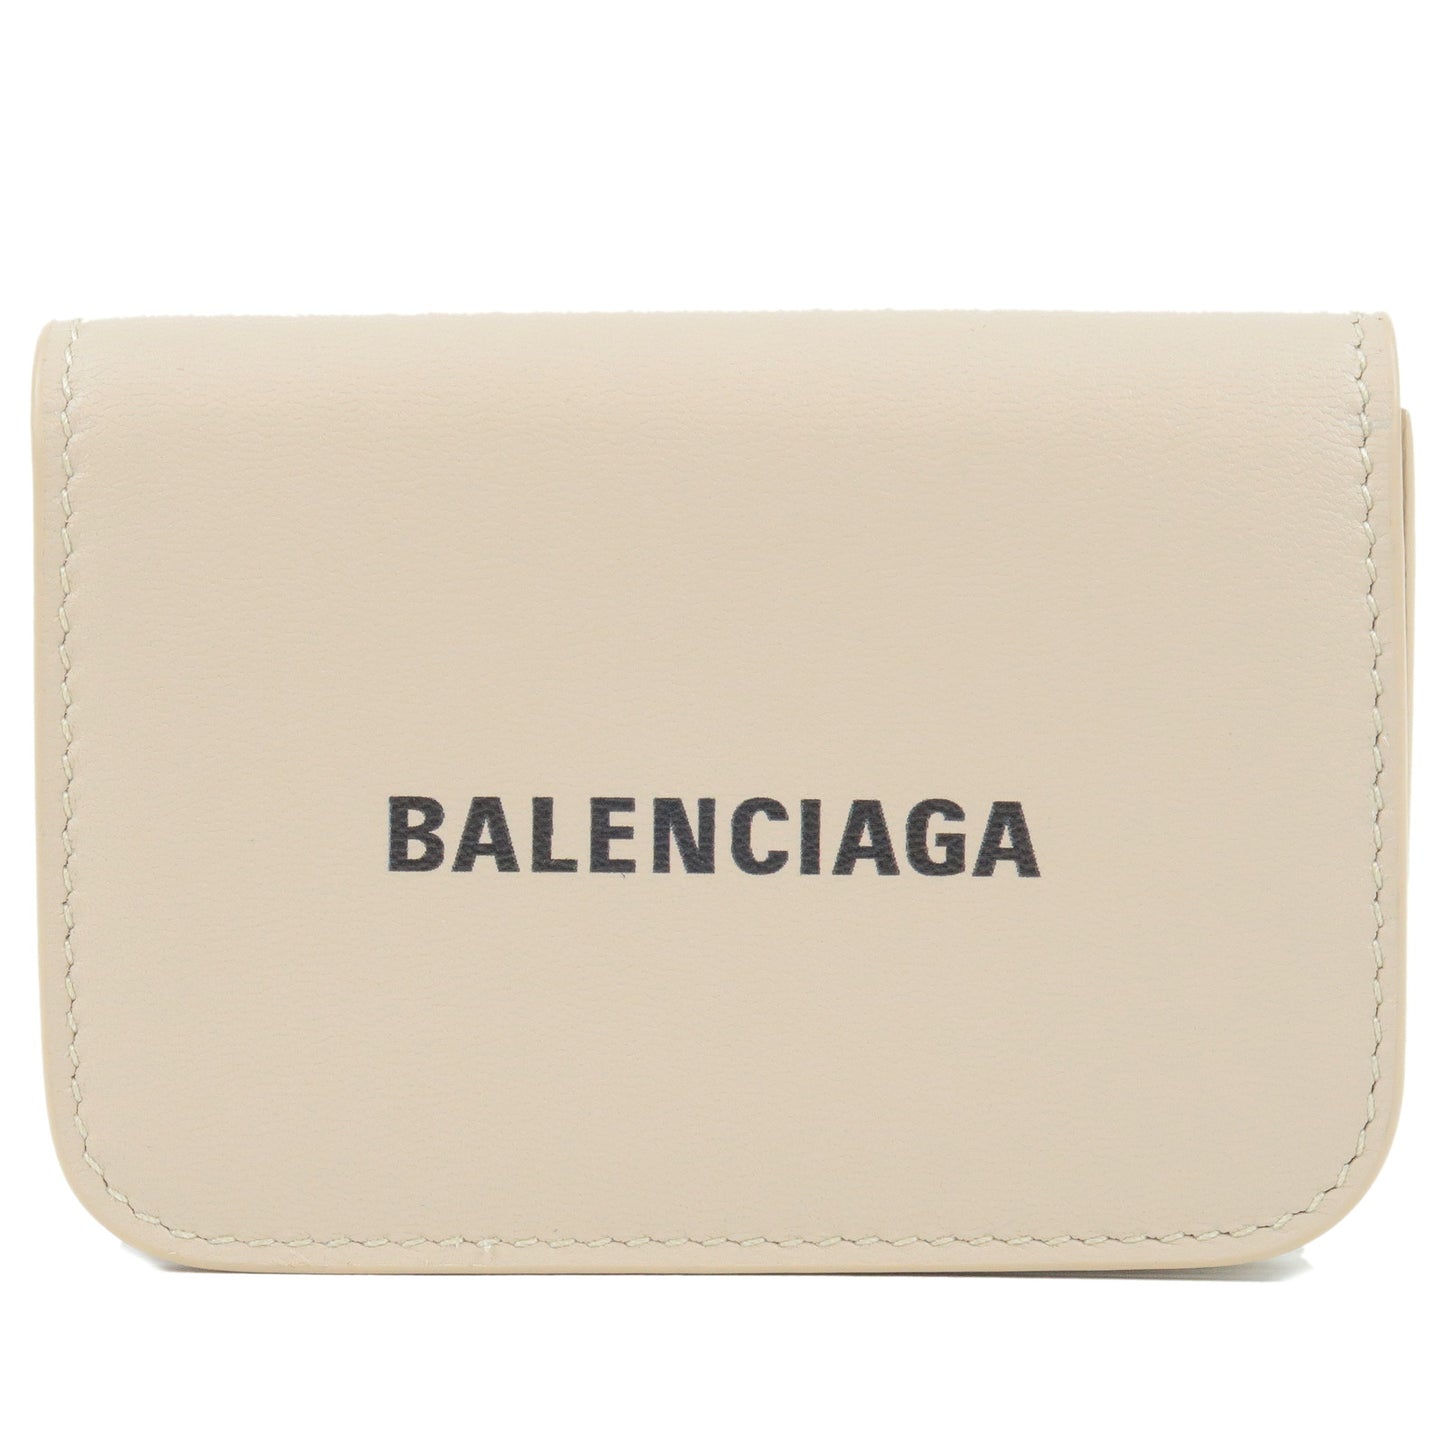 BALENCIAGA-Leather-Cash-Mini-Tri-Fold-Wallet-Light-Beige-593813